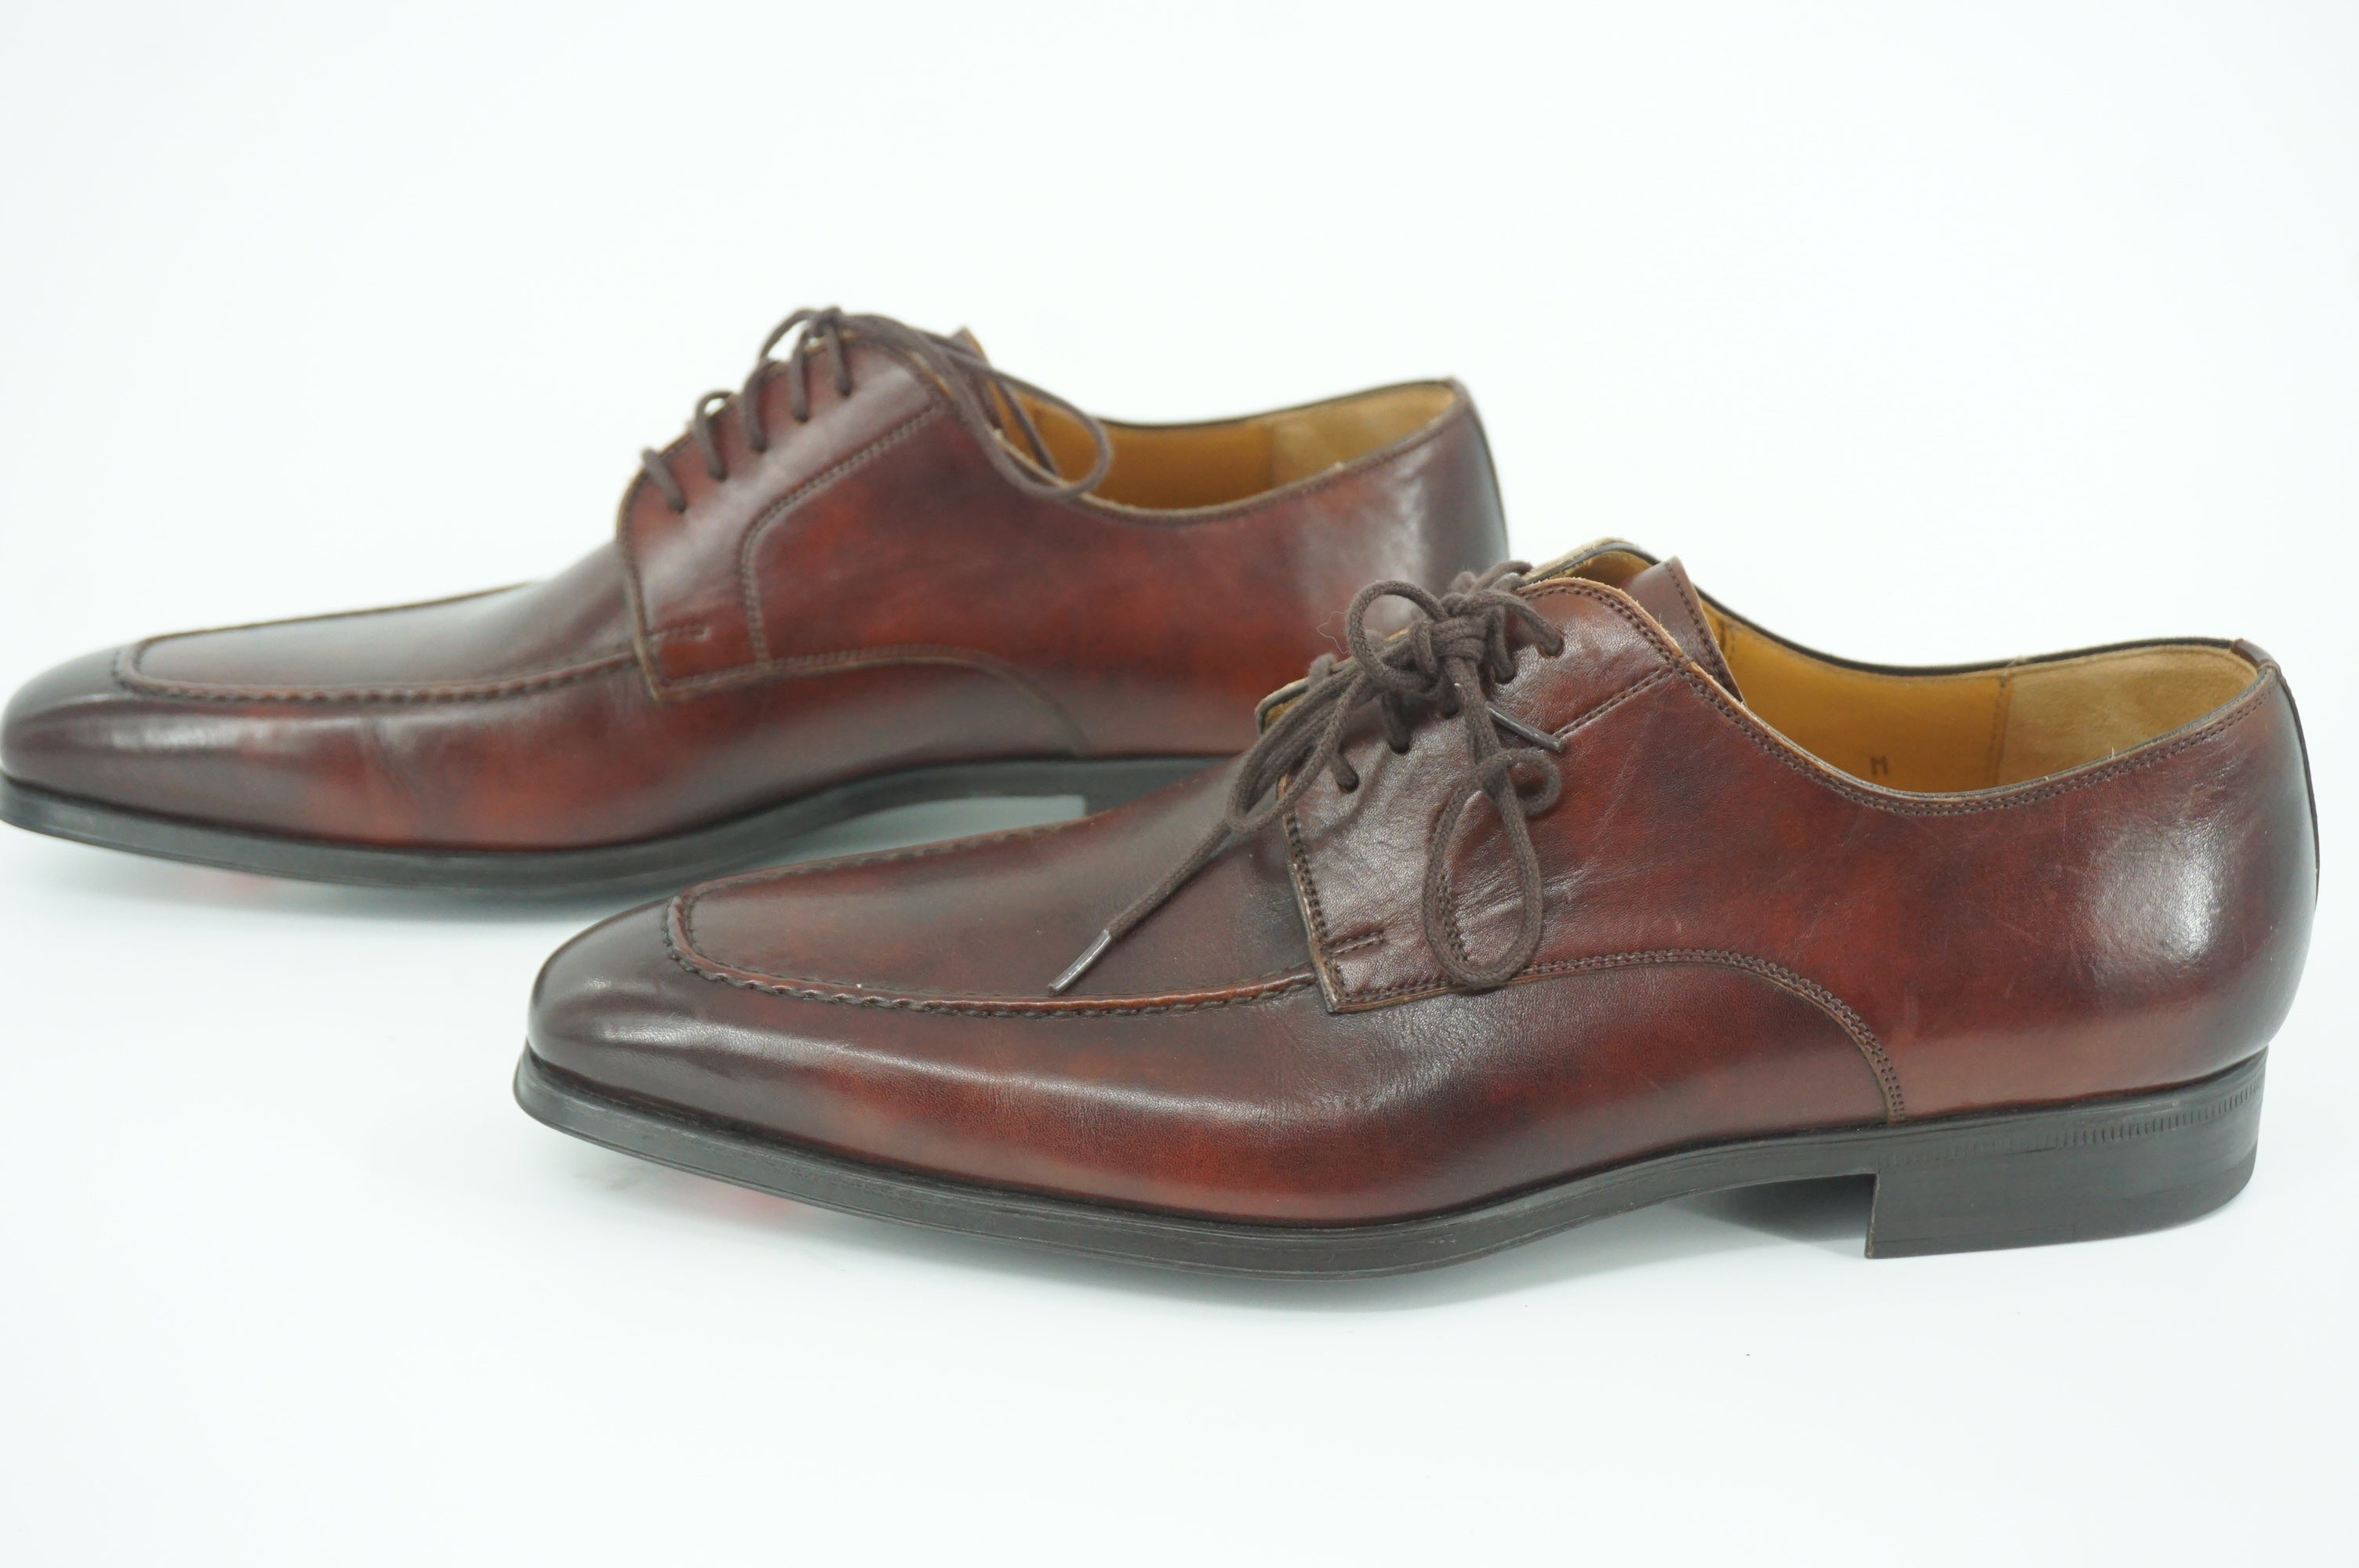 Magnanni Waro Apron Toe Oxford Derby Dress Shoes Size 8 Brown $395